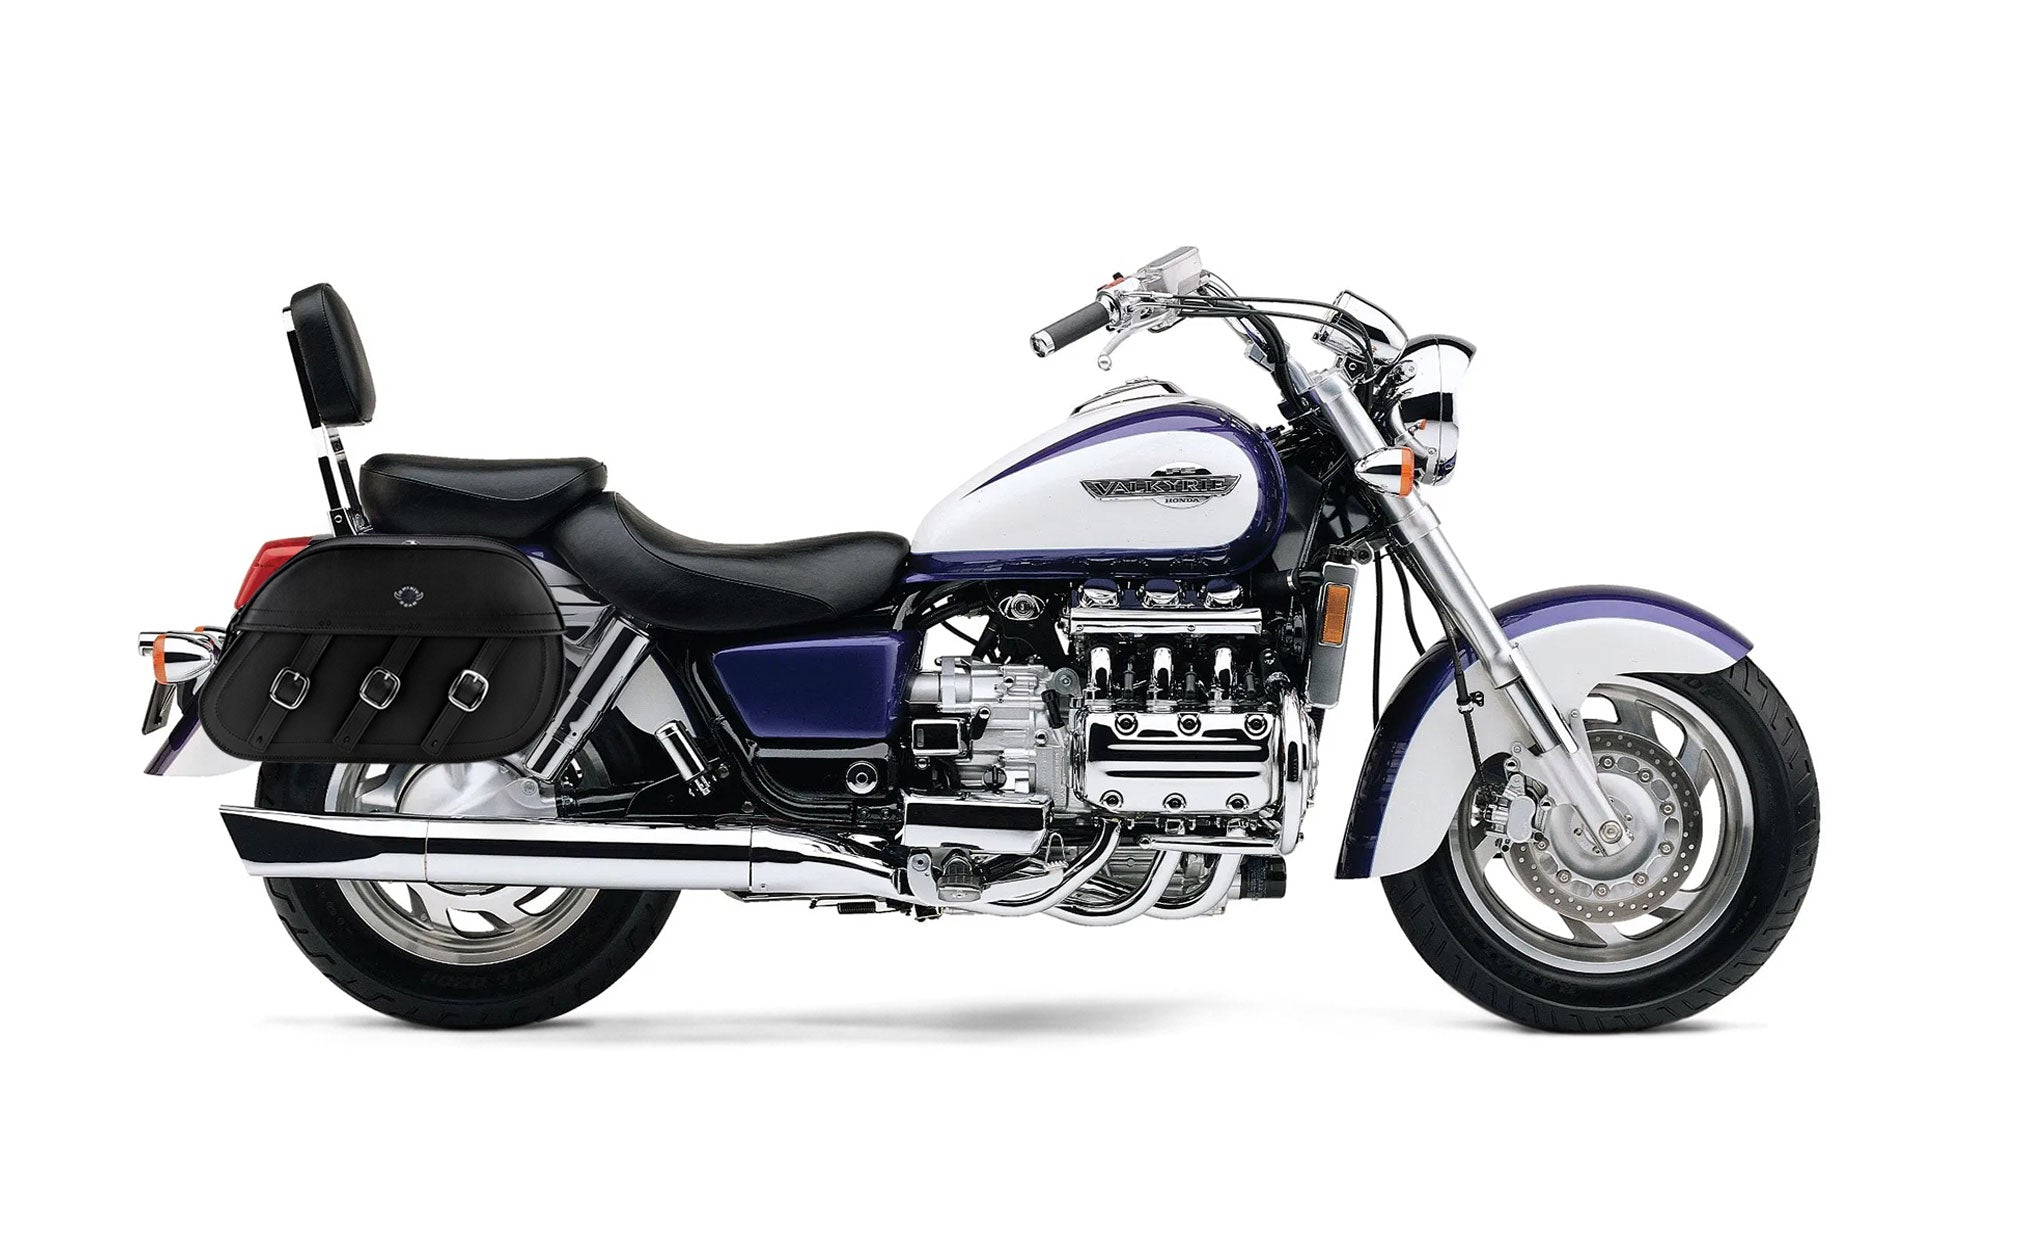 Viking Trianon Extra Large Honda Valkyrie 1500 Interstate Leather Motorcycle Saddlebags on Bike Photo @expand